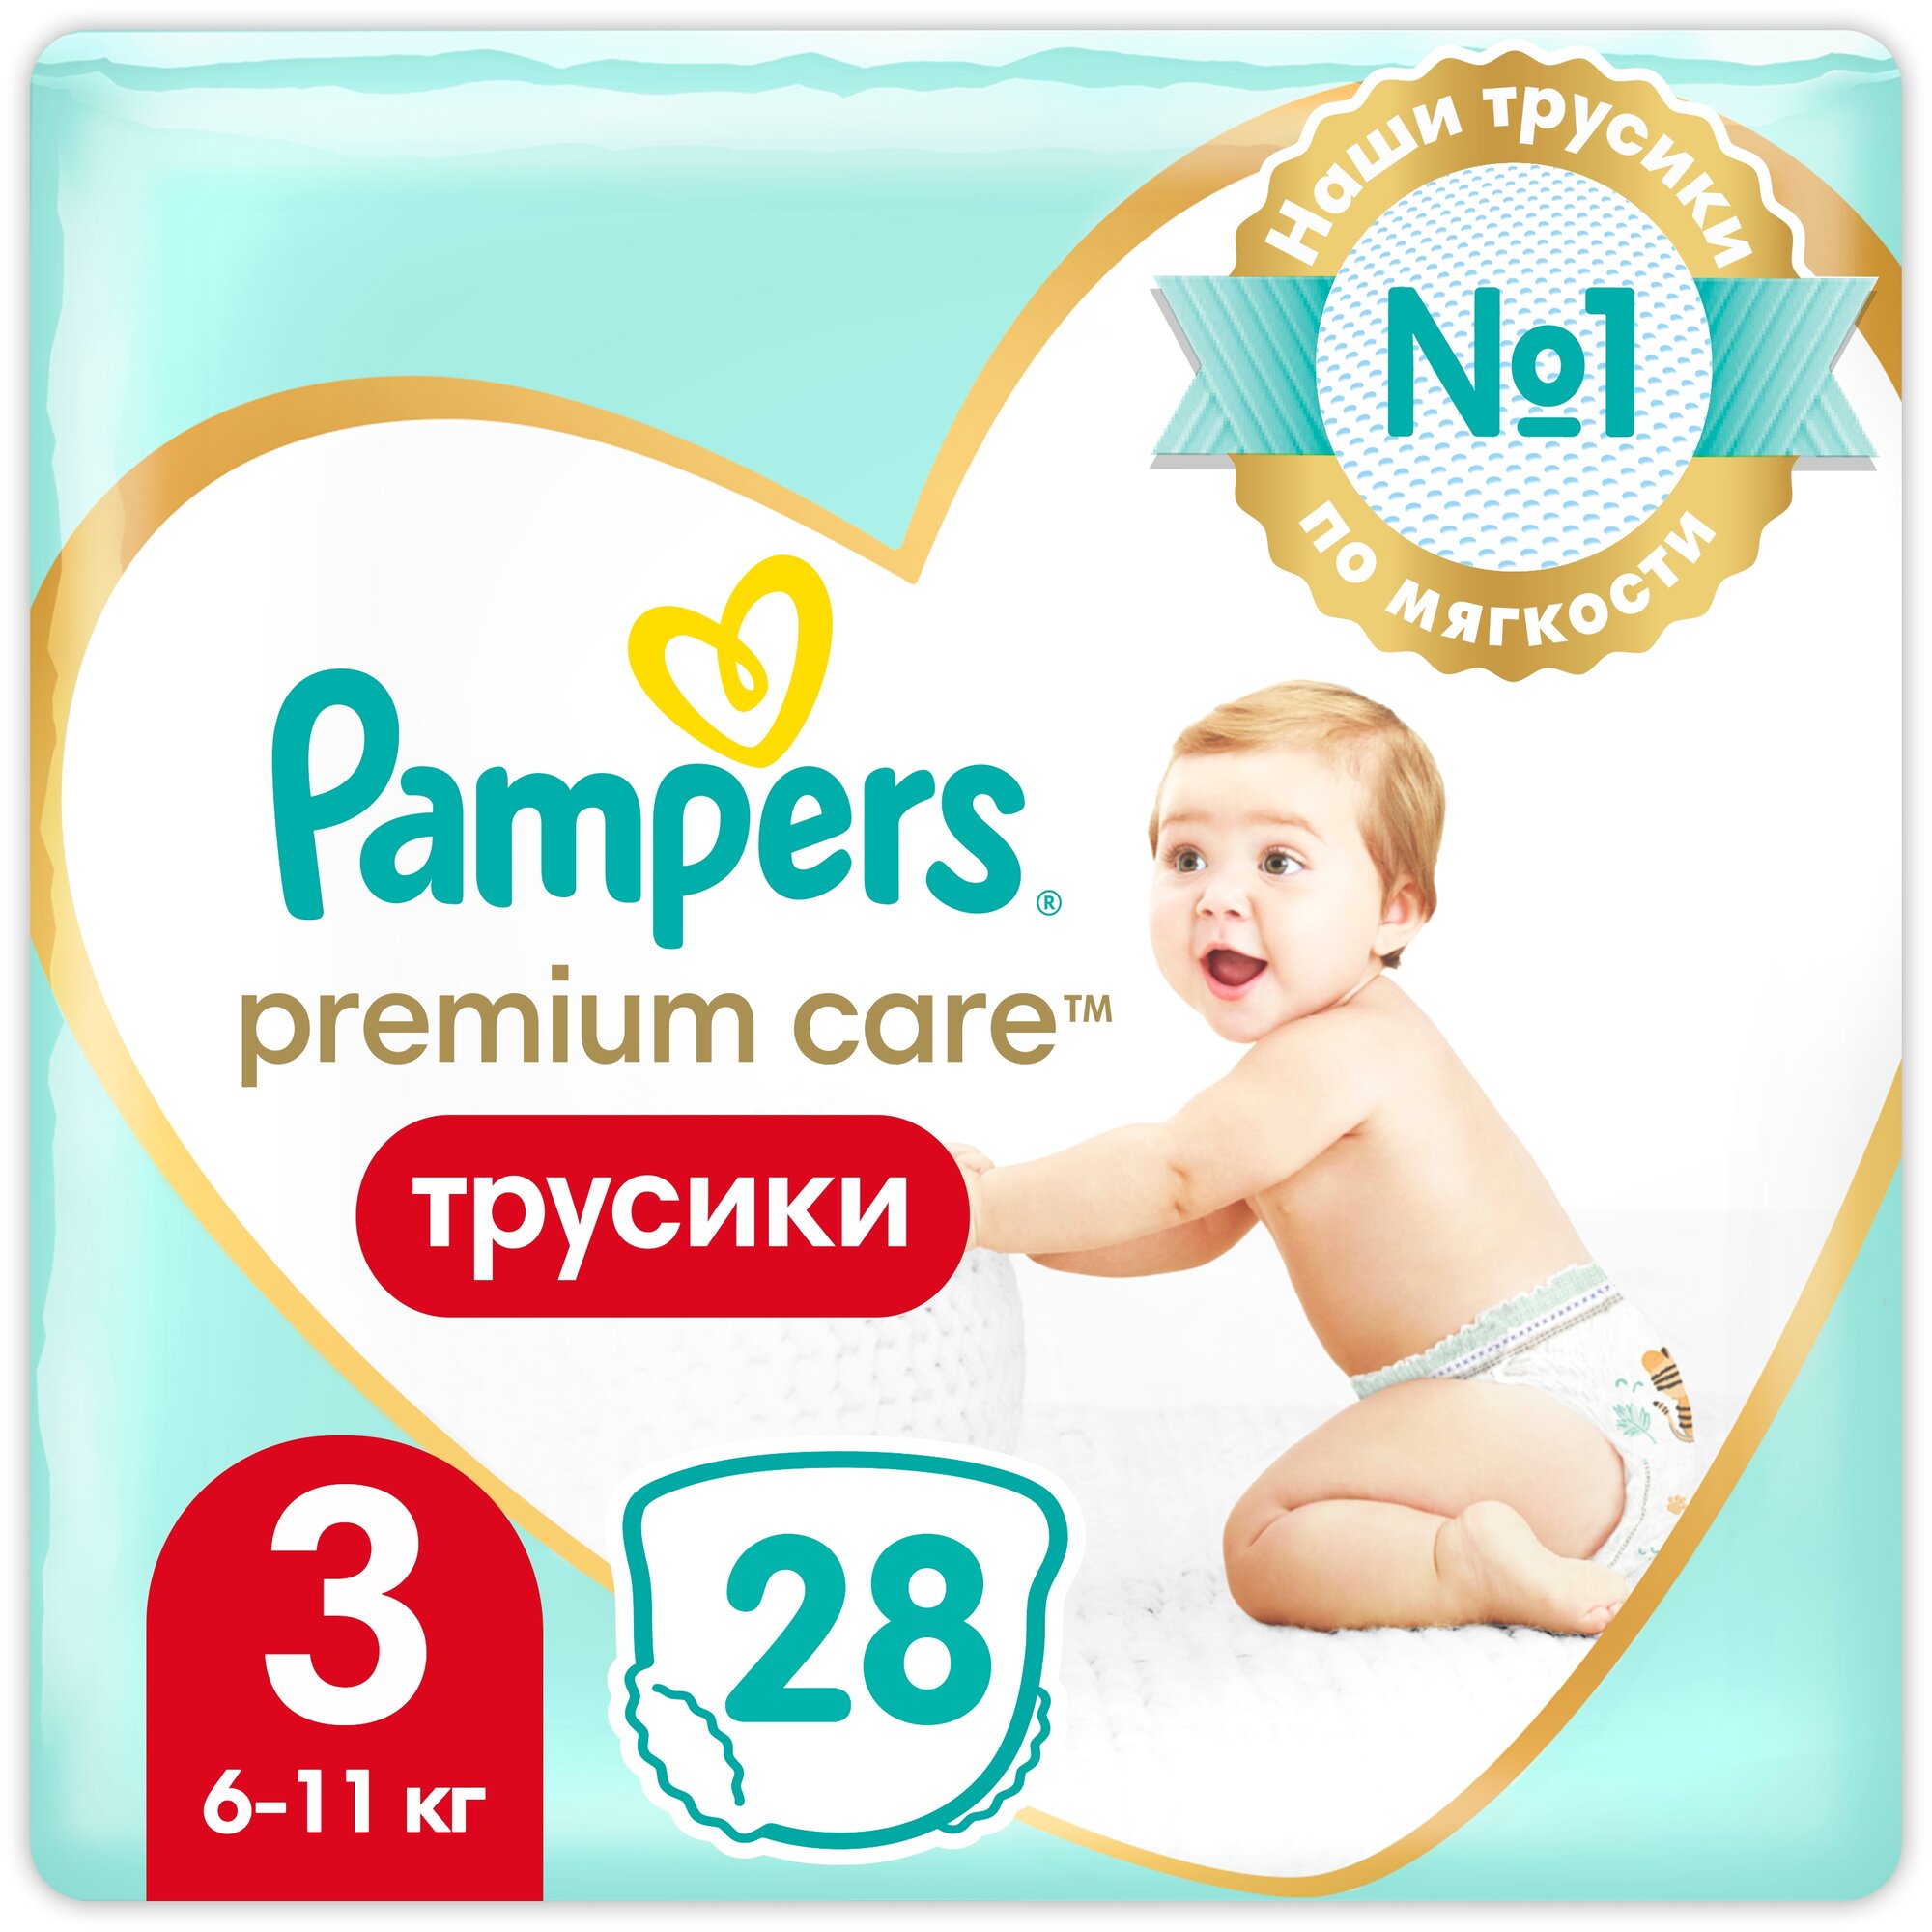 Pampers Premium Care 3D Soft трусики 3, 6-11 кг, 28 шт., белый